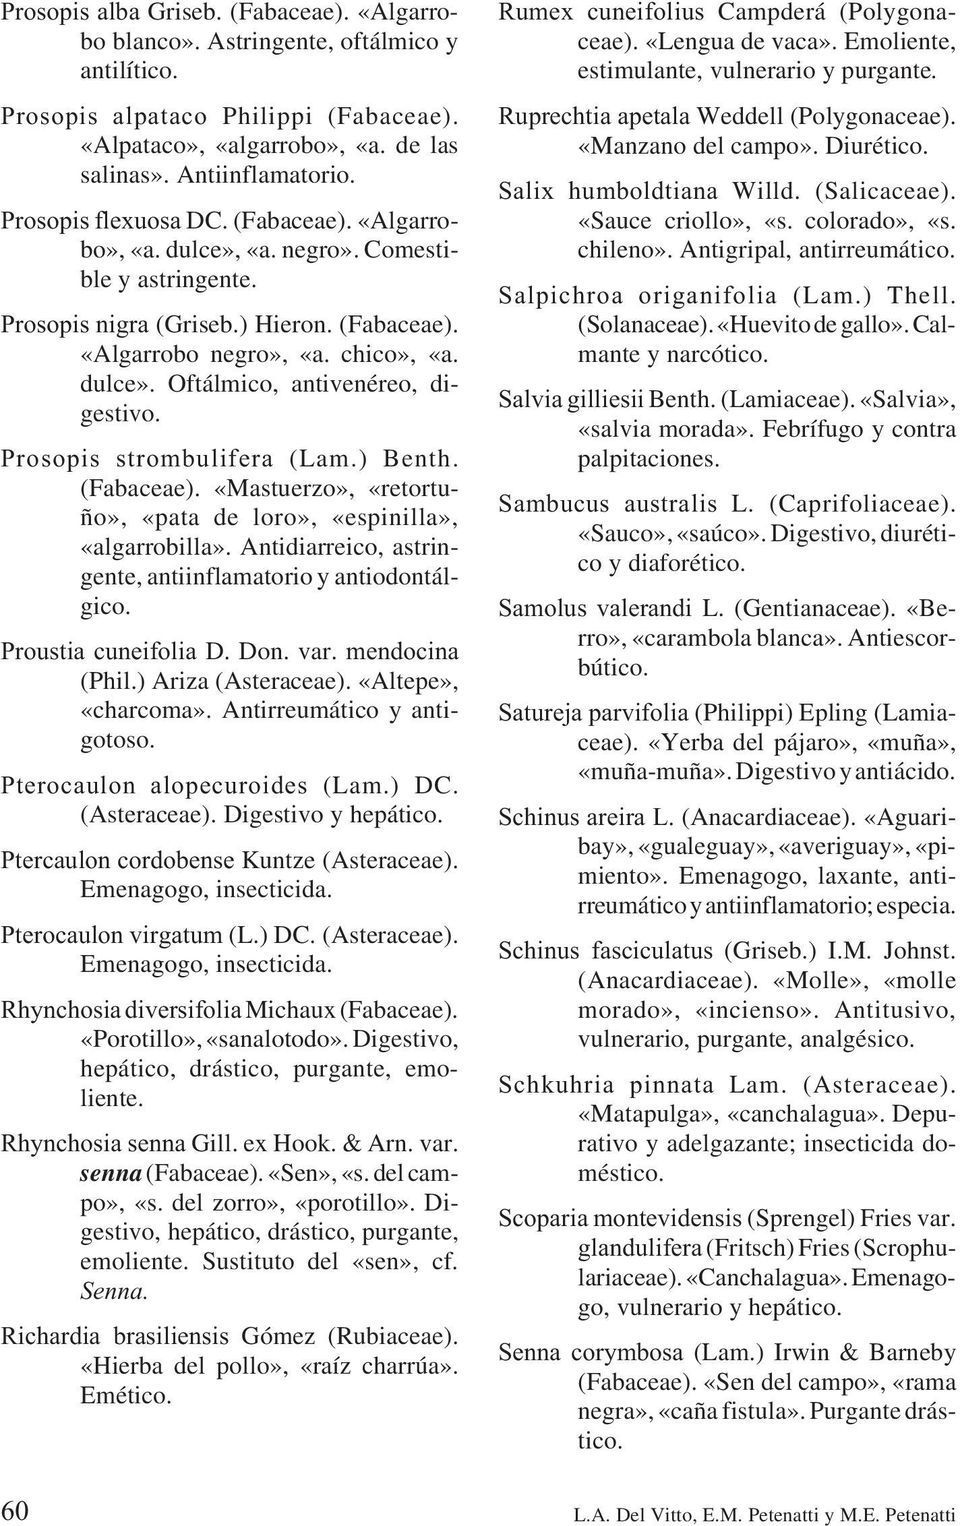 Prosopis strombulifera (Lam.) Benth. (Fabaceae). «Mastuerzo», «retortuño», «pata de loro», «espinilla», «algarrobilla». Antidiarreico, astringente, antiinflamatorio y antiodontálgico.